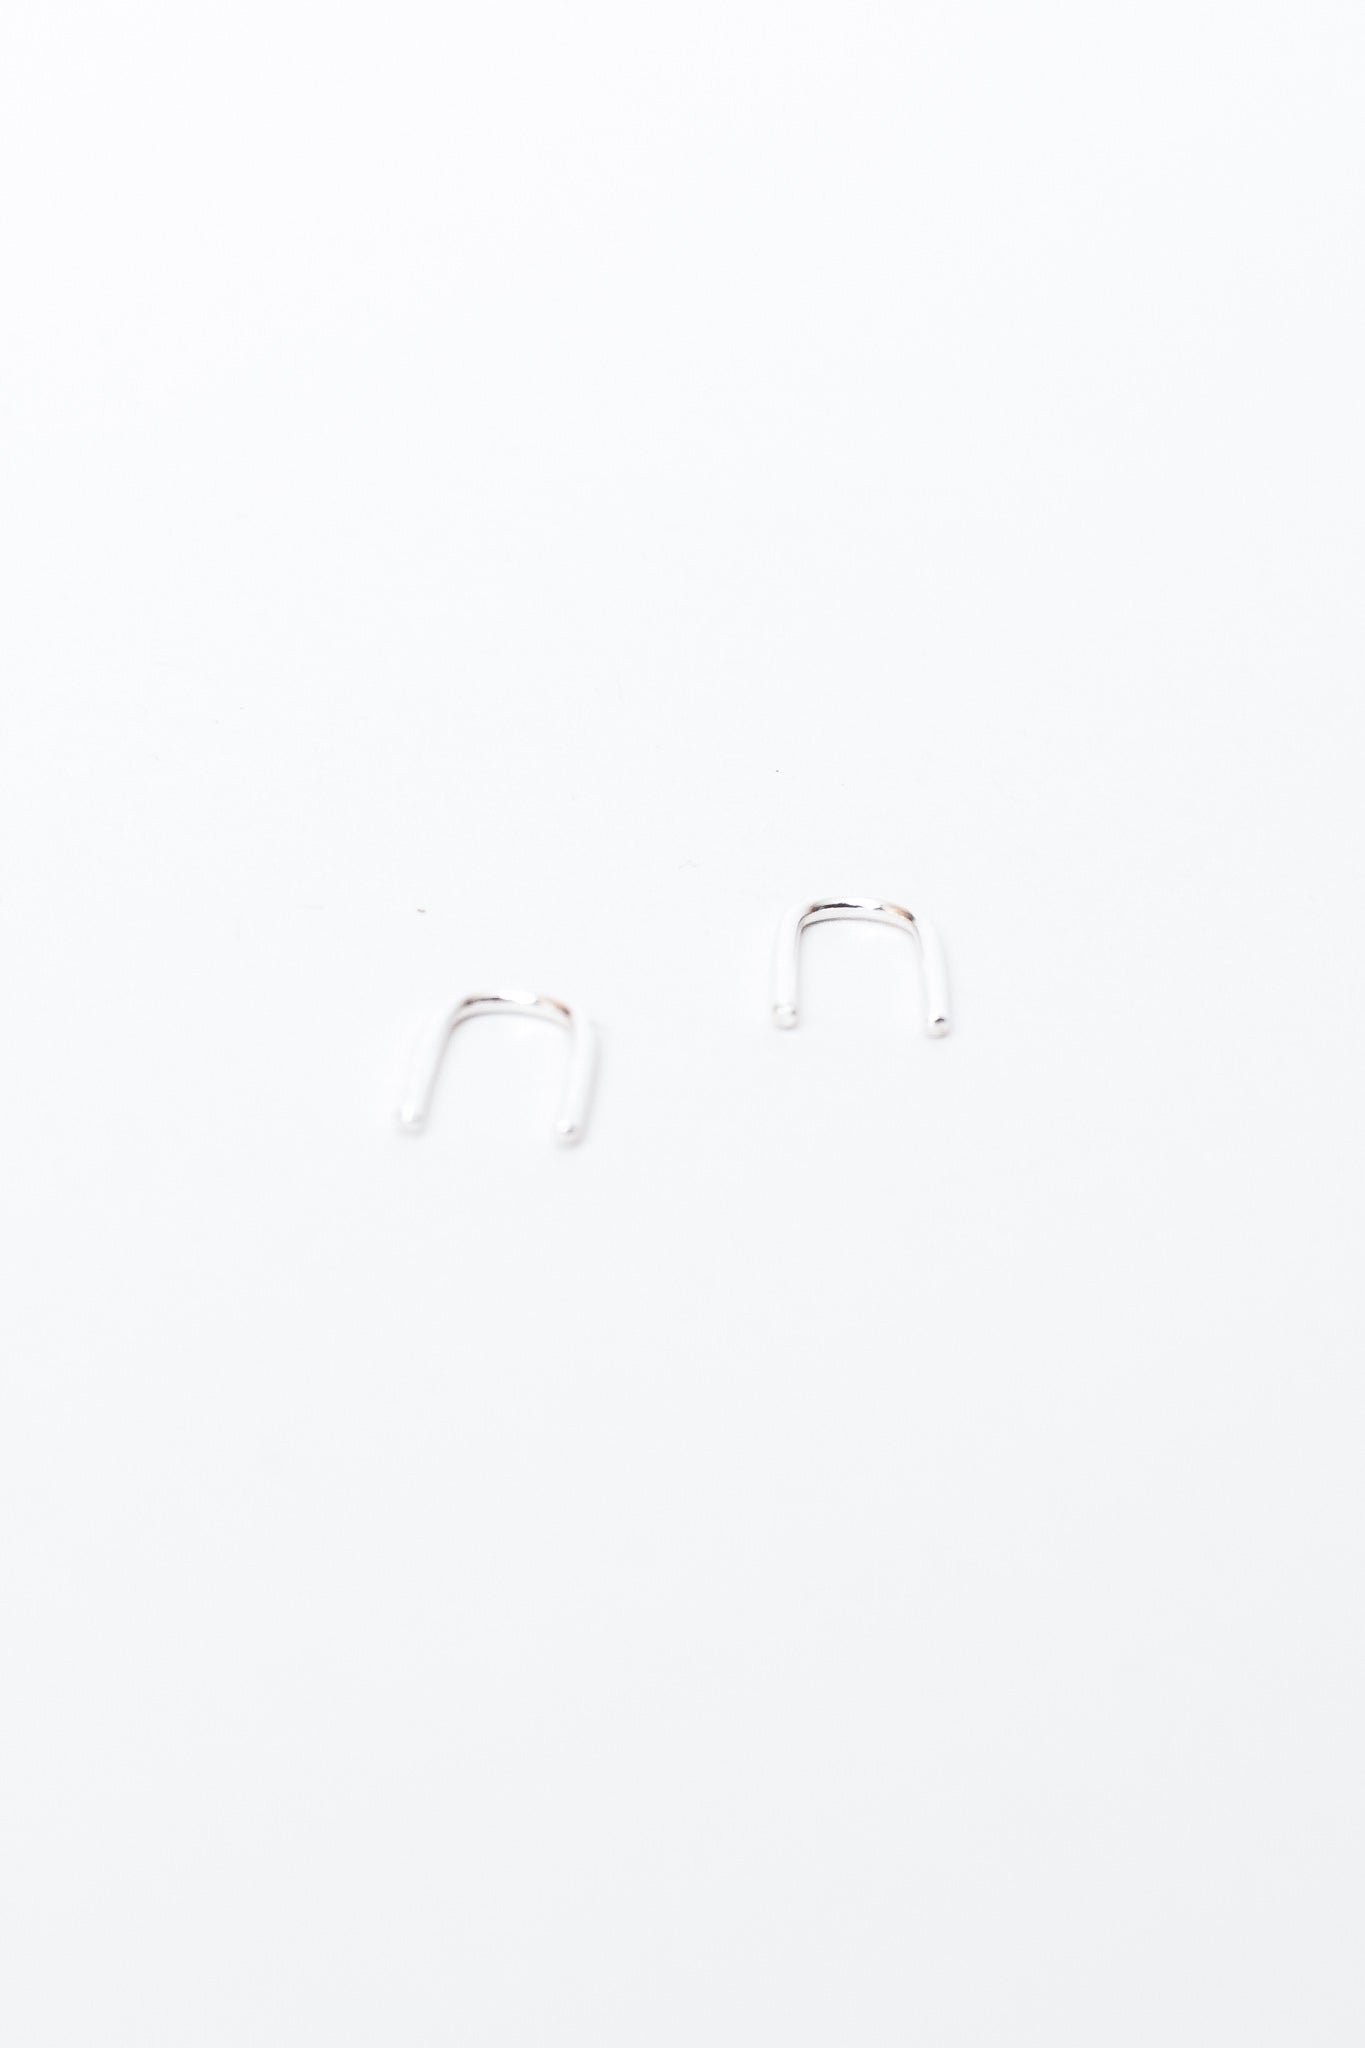 U-Shaped Earrings - Silver, Baleen, - Frances Jaye